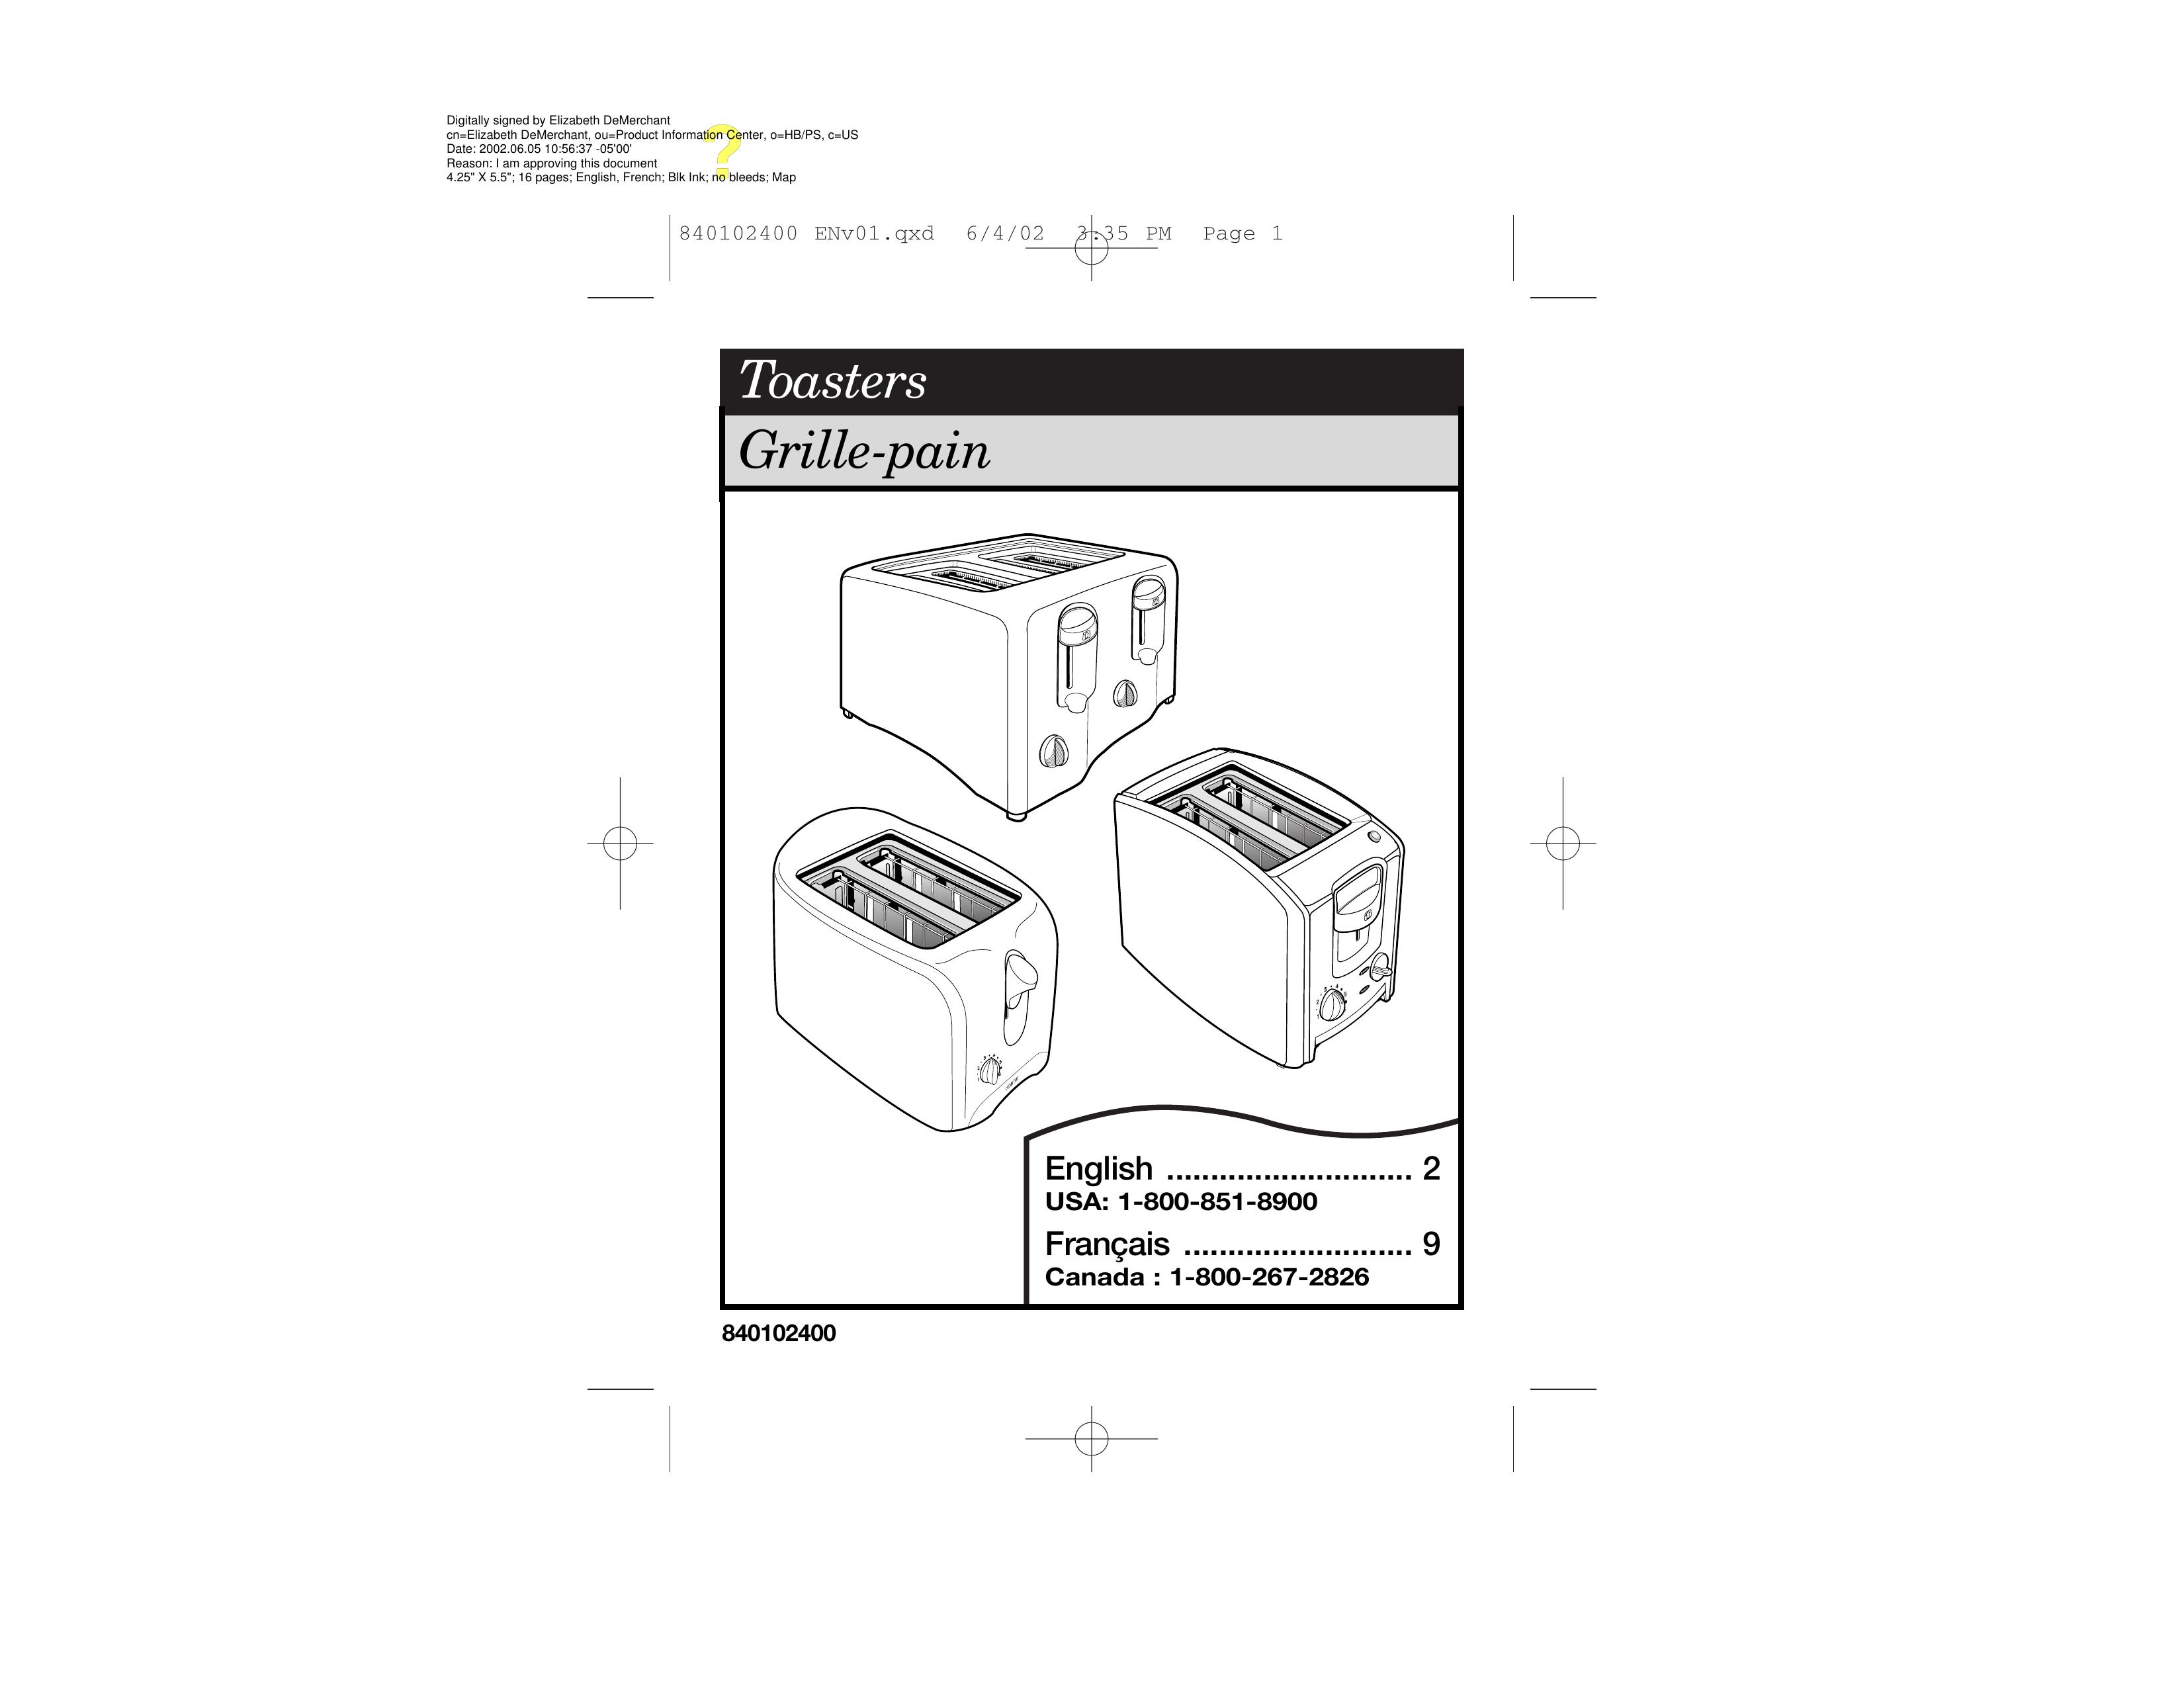 Hamilton Beach 840102400 Toaster User Manual